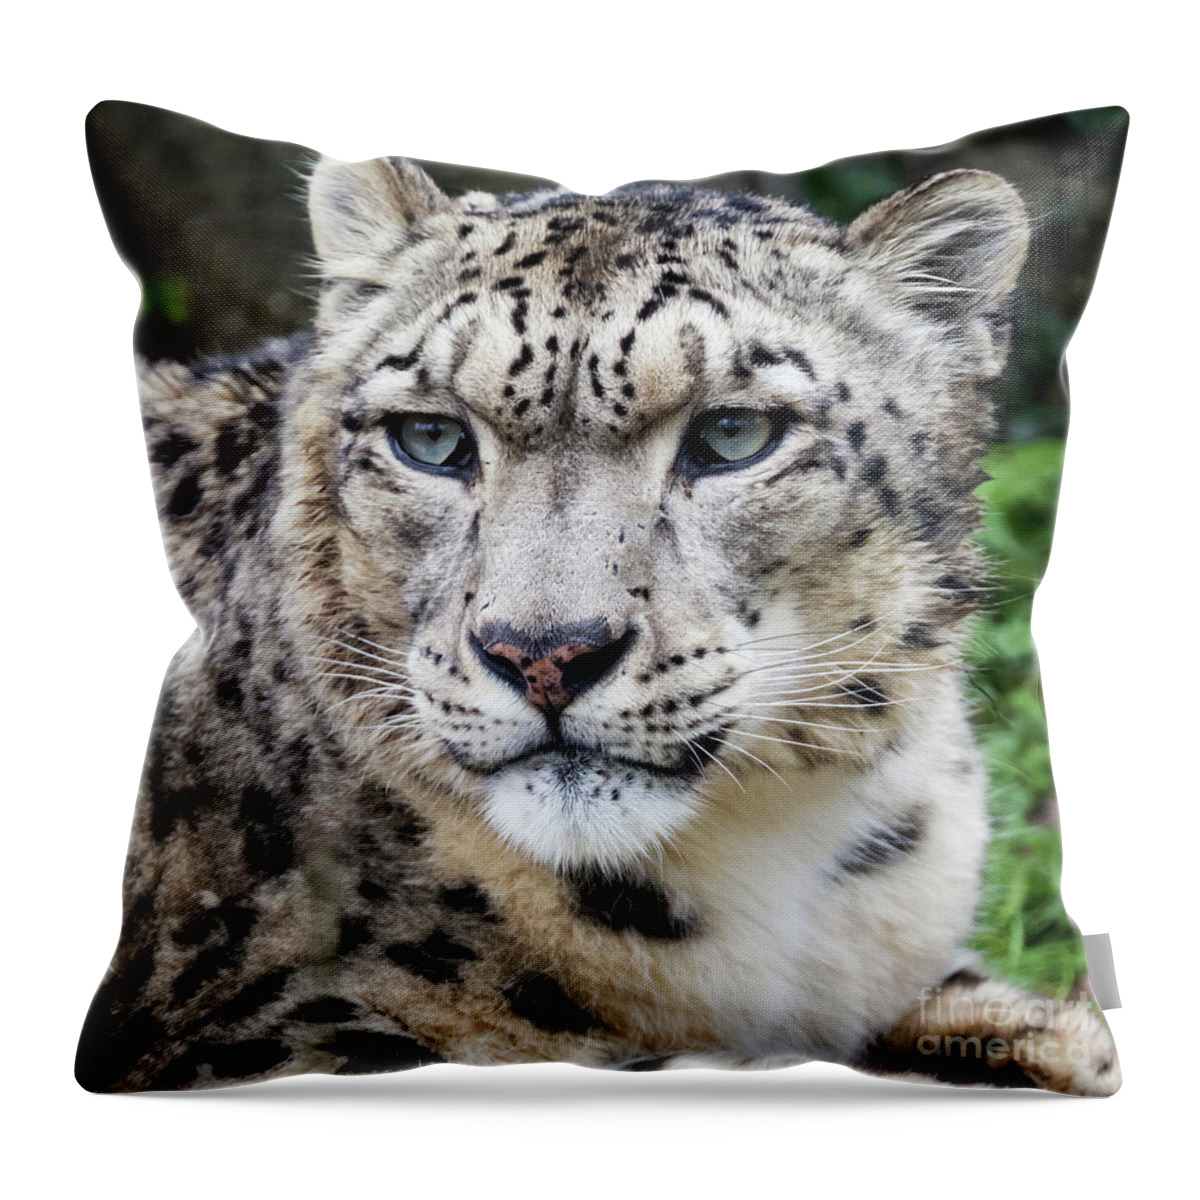 Leopard Throw Pillow featuring the photograph Adult snow leopard portrait by Jane Rix